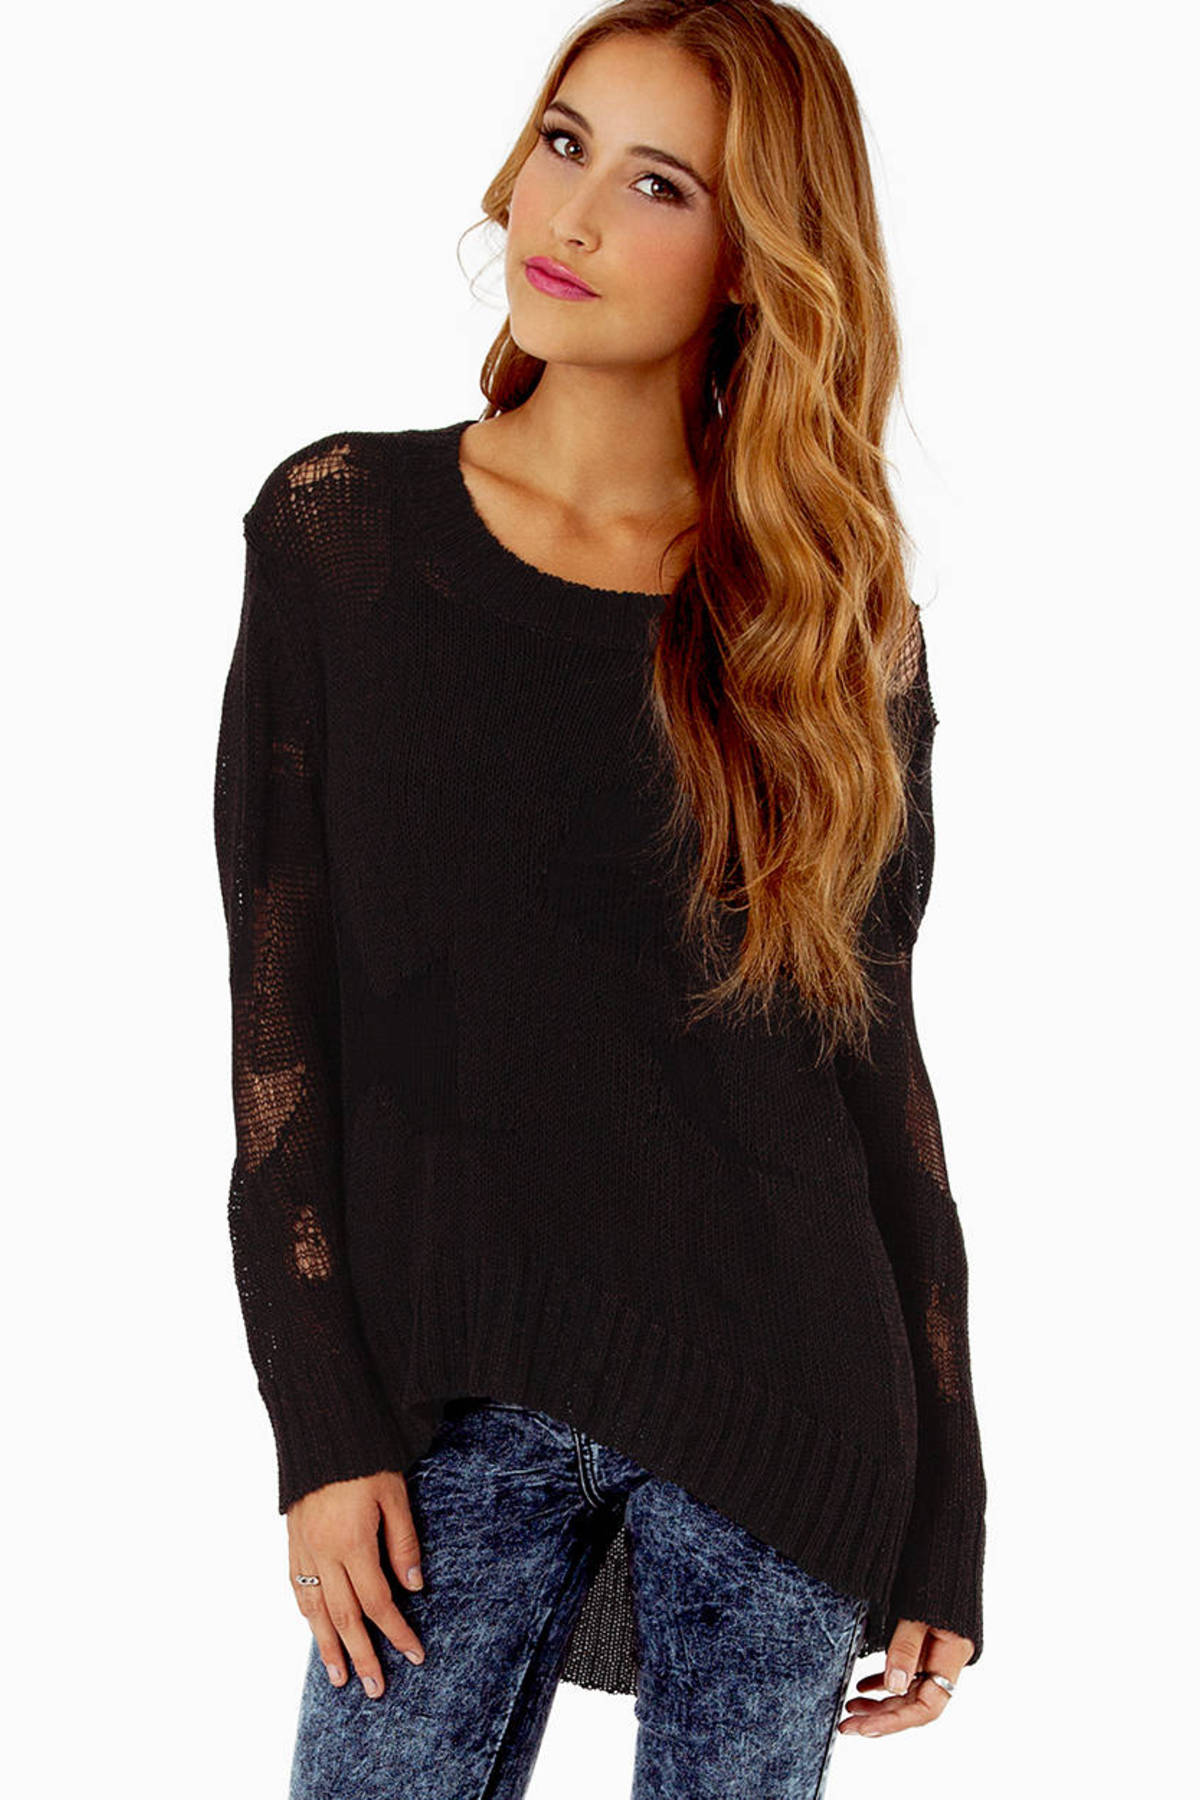 Black Sweater - Distressed Sweater - Black Oversized Sweater